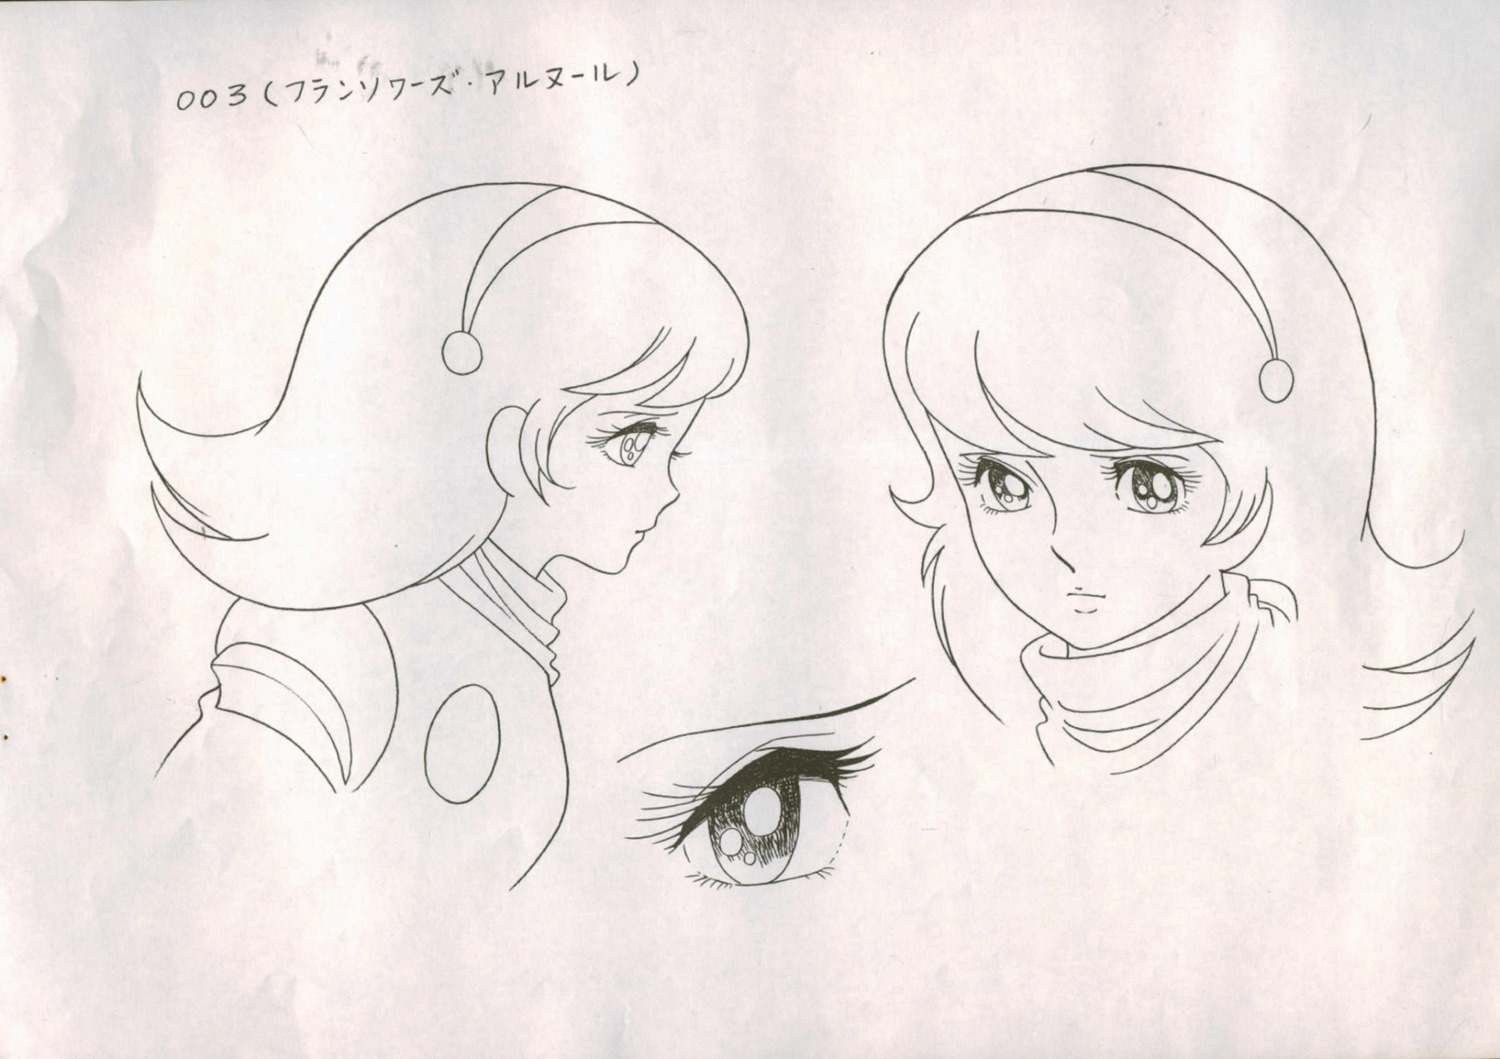 character_design cyborg_009 cyborg_009_(1979) production_materials settei toyoo_ashida